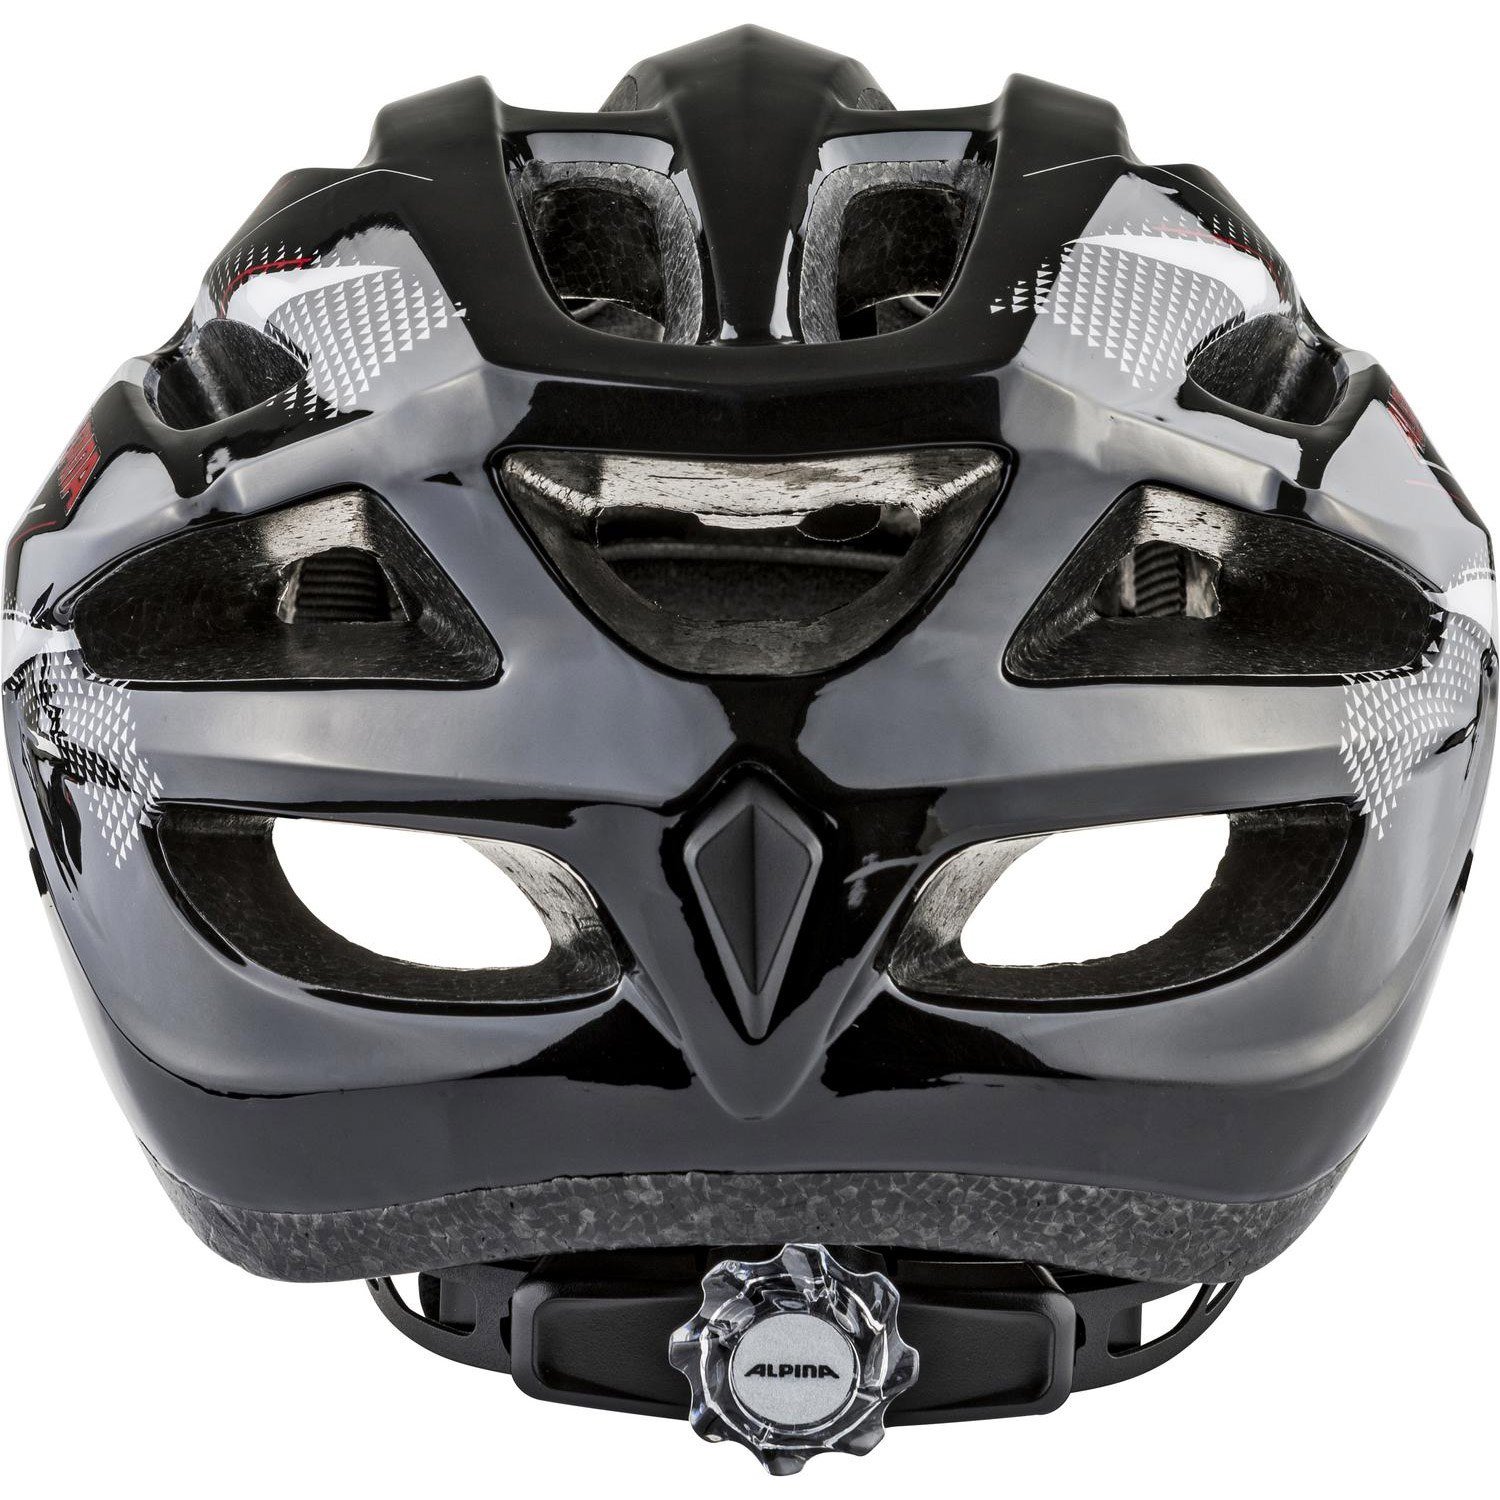 Alpina helm MTB 17 black-white-red 